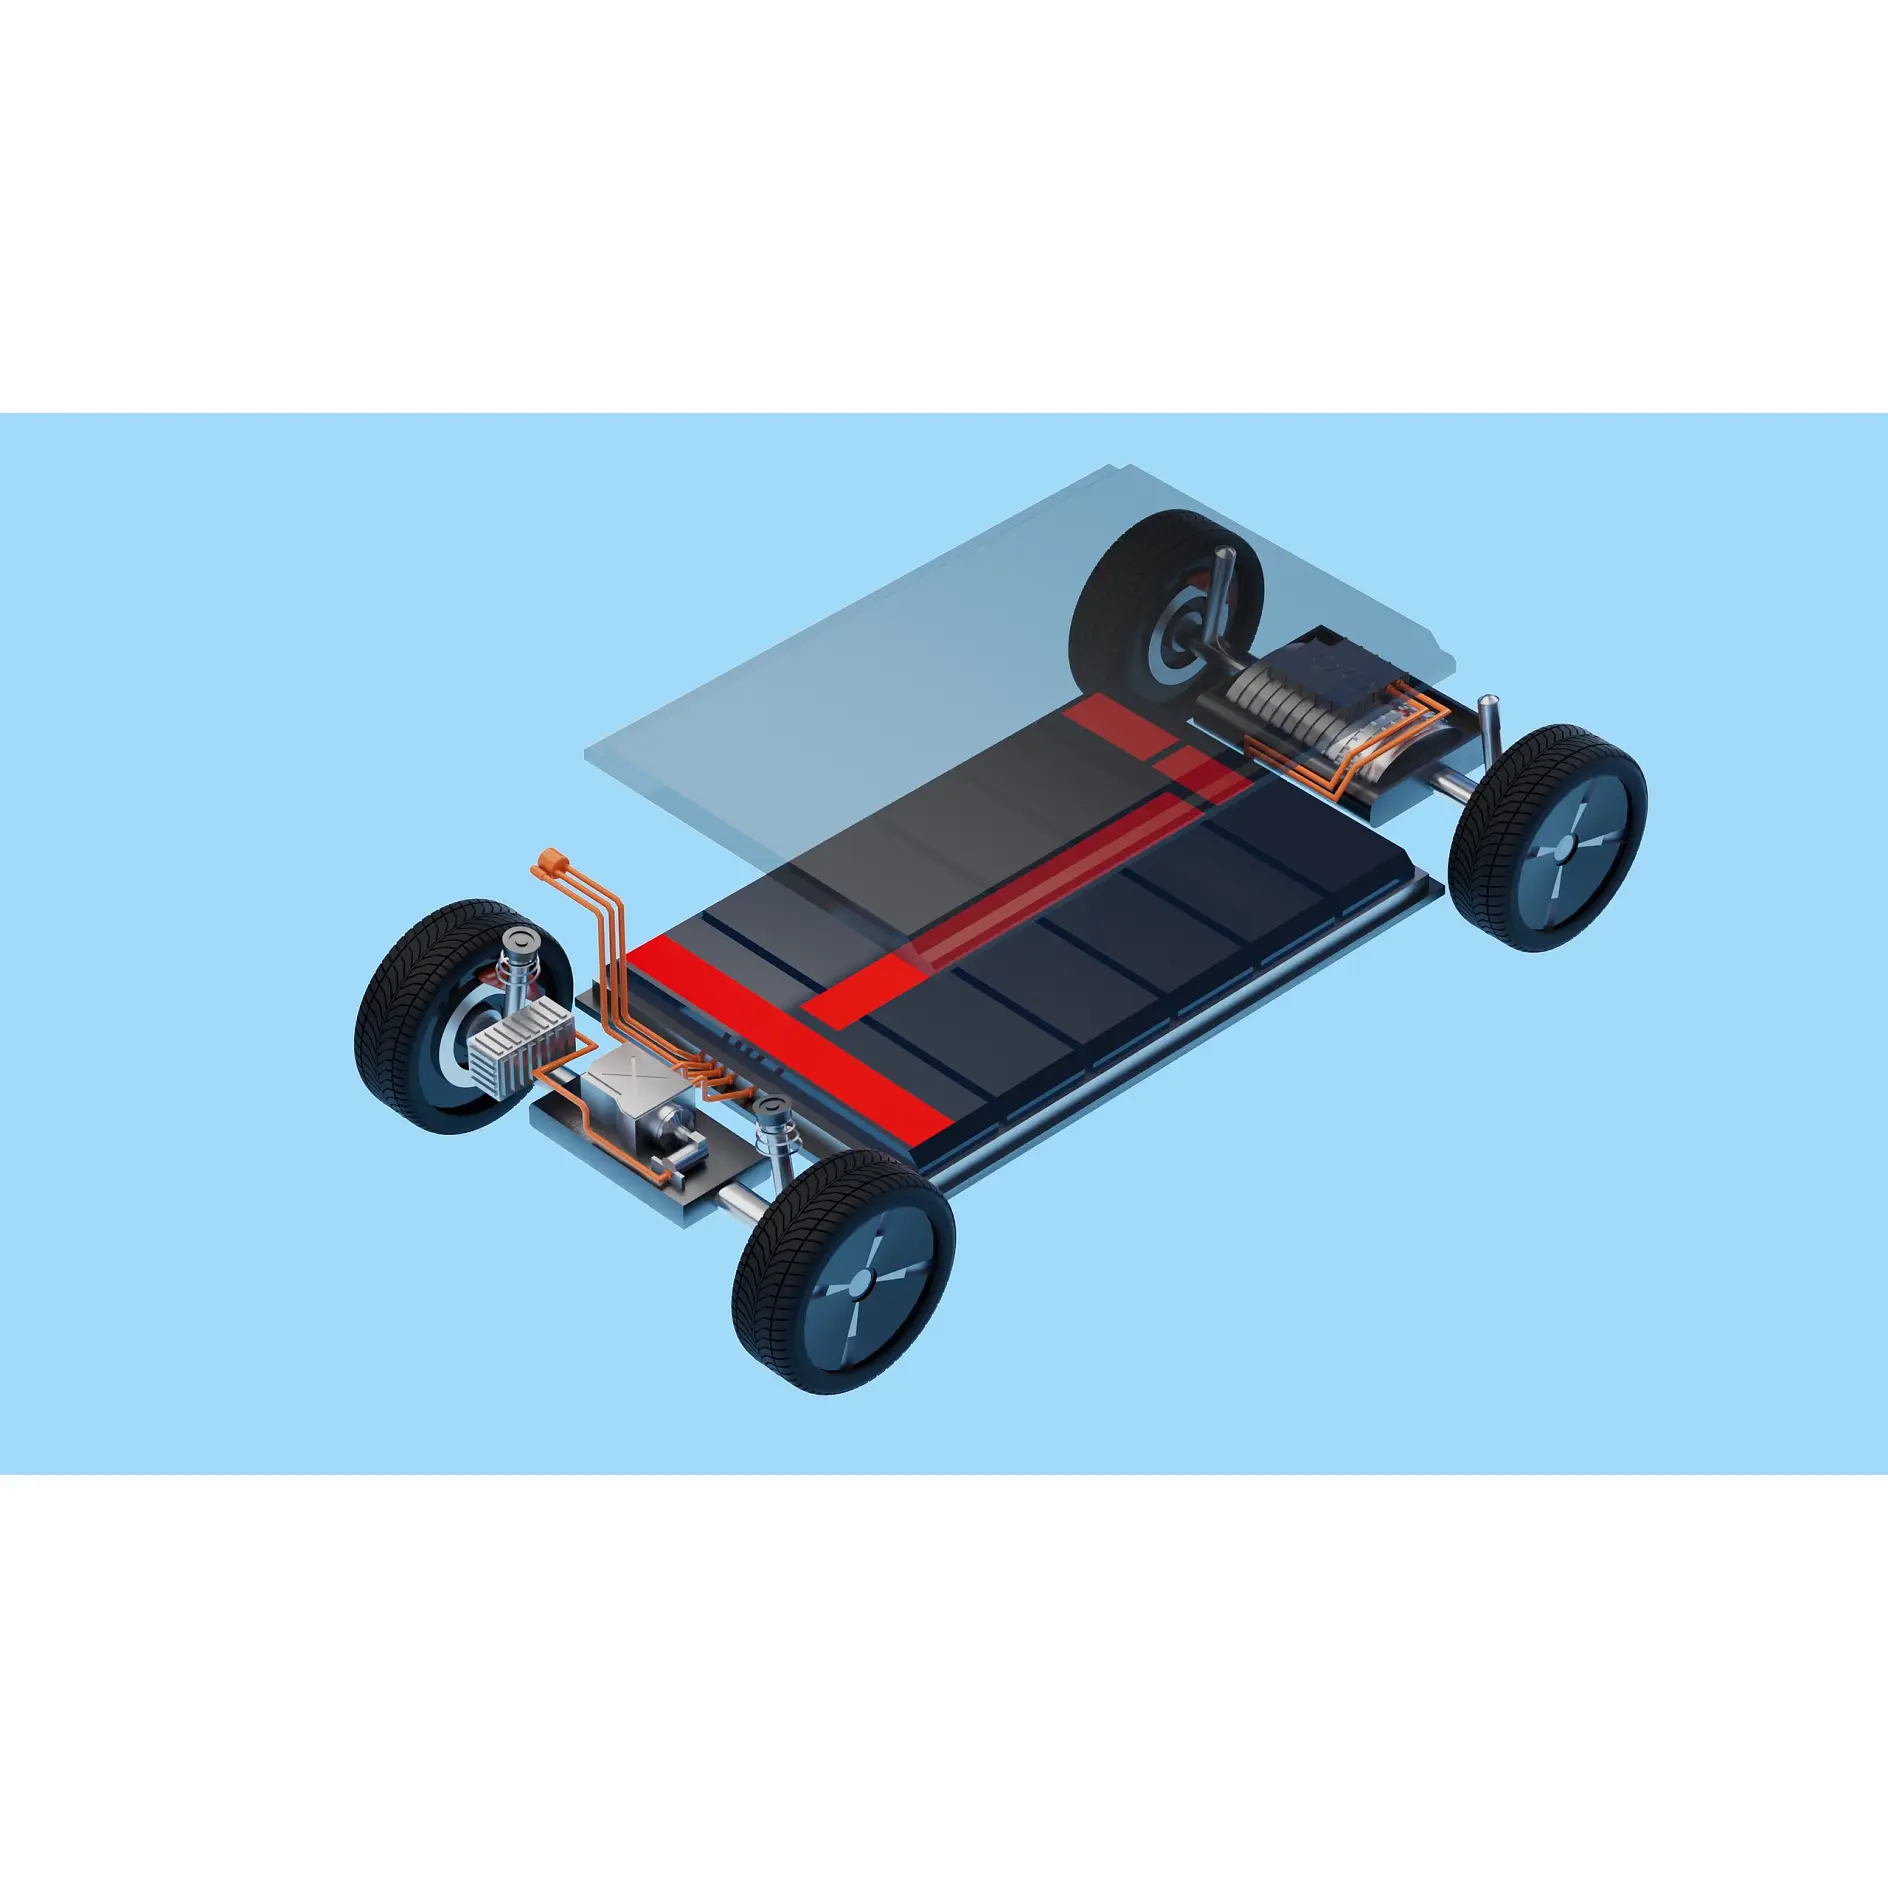 tesa-automotive-battery-insulation-cover-300dpi